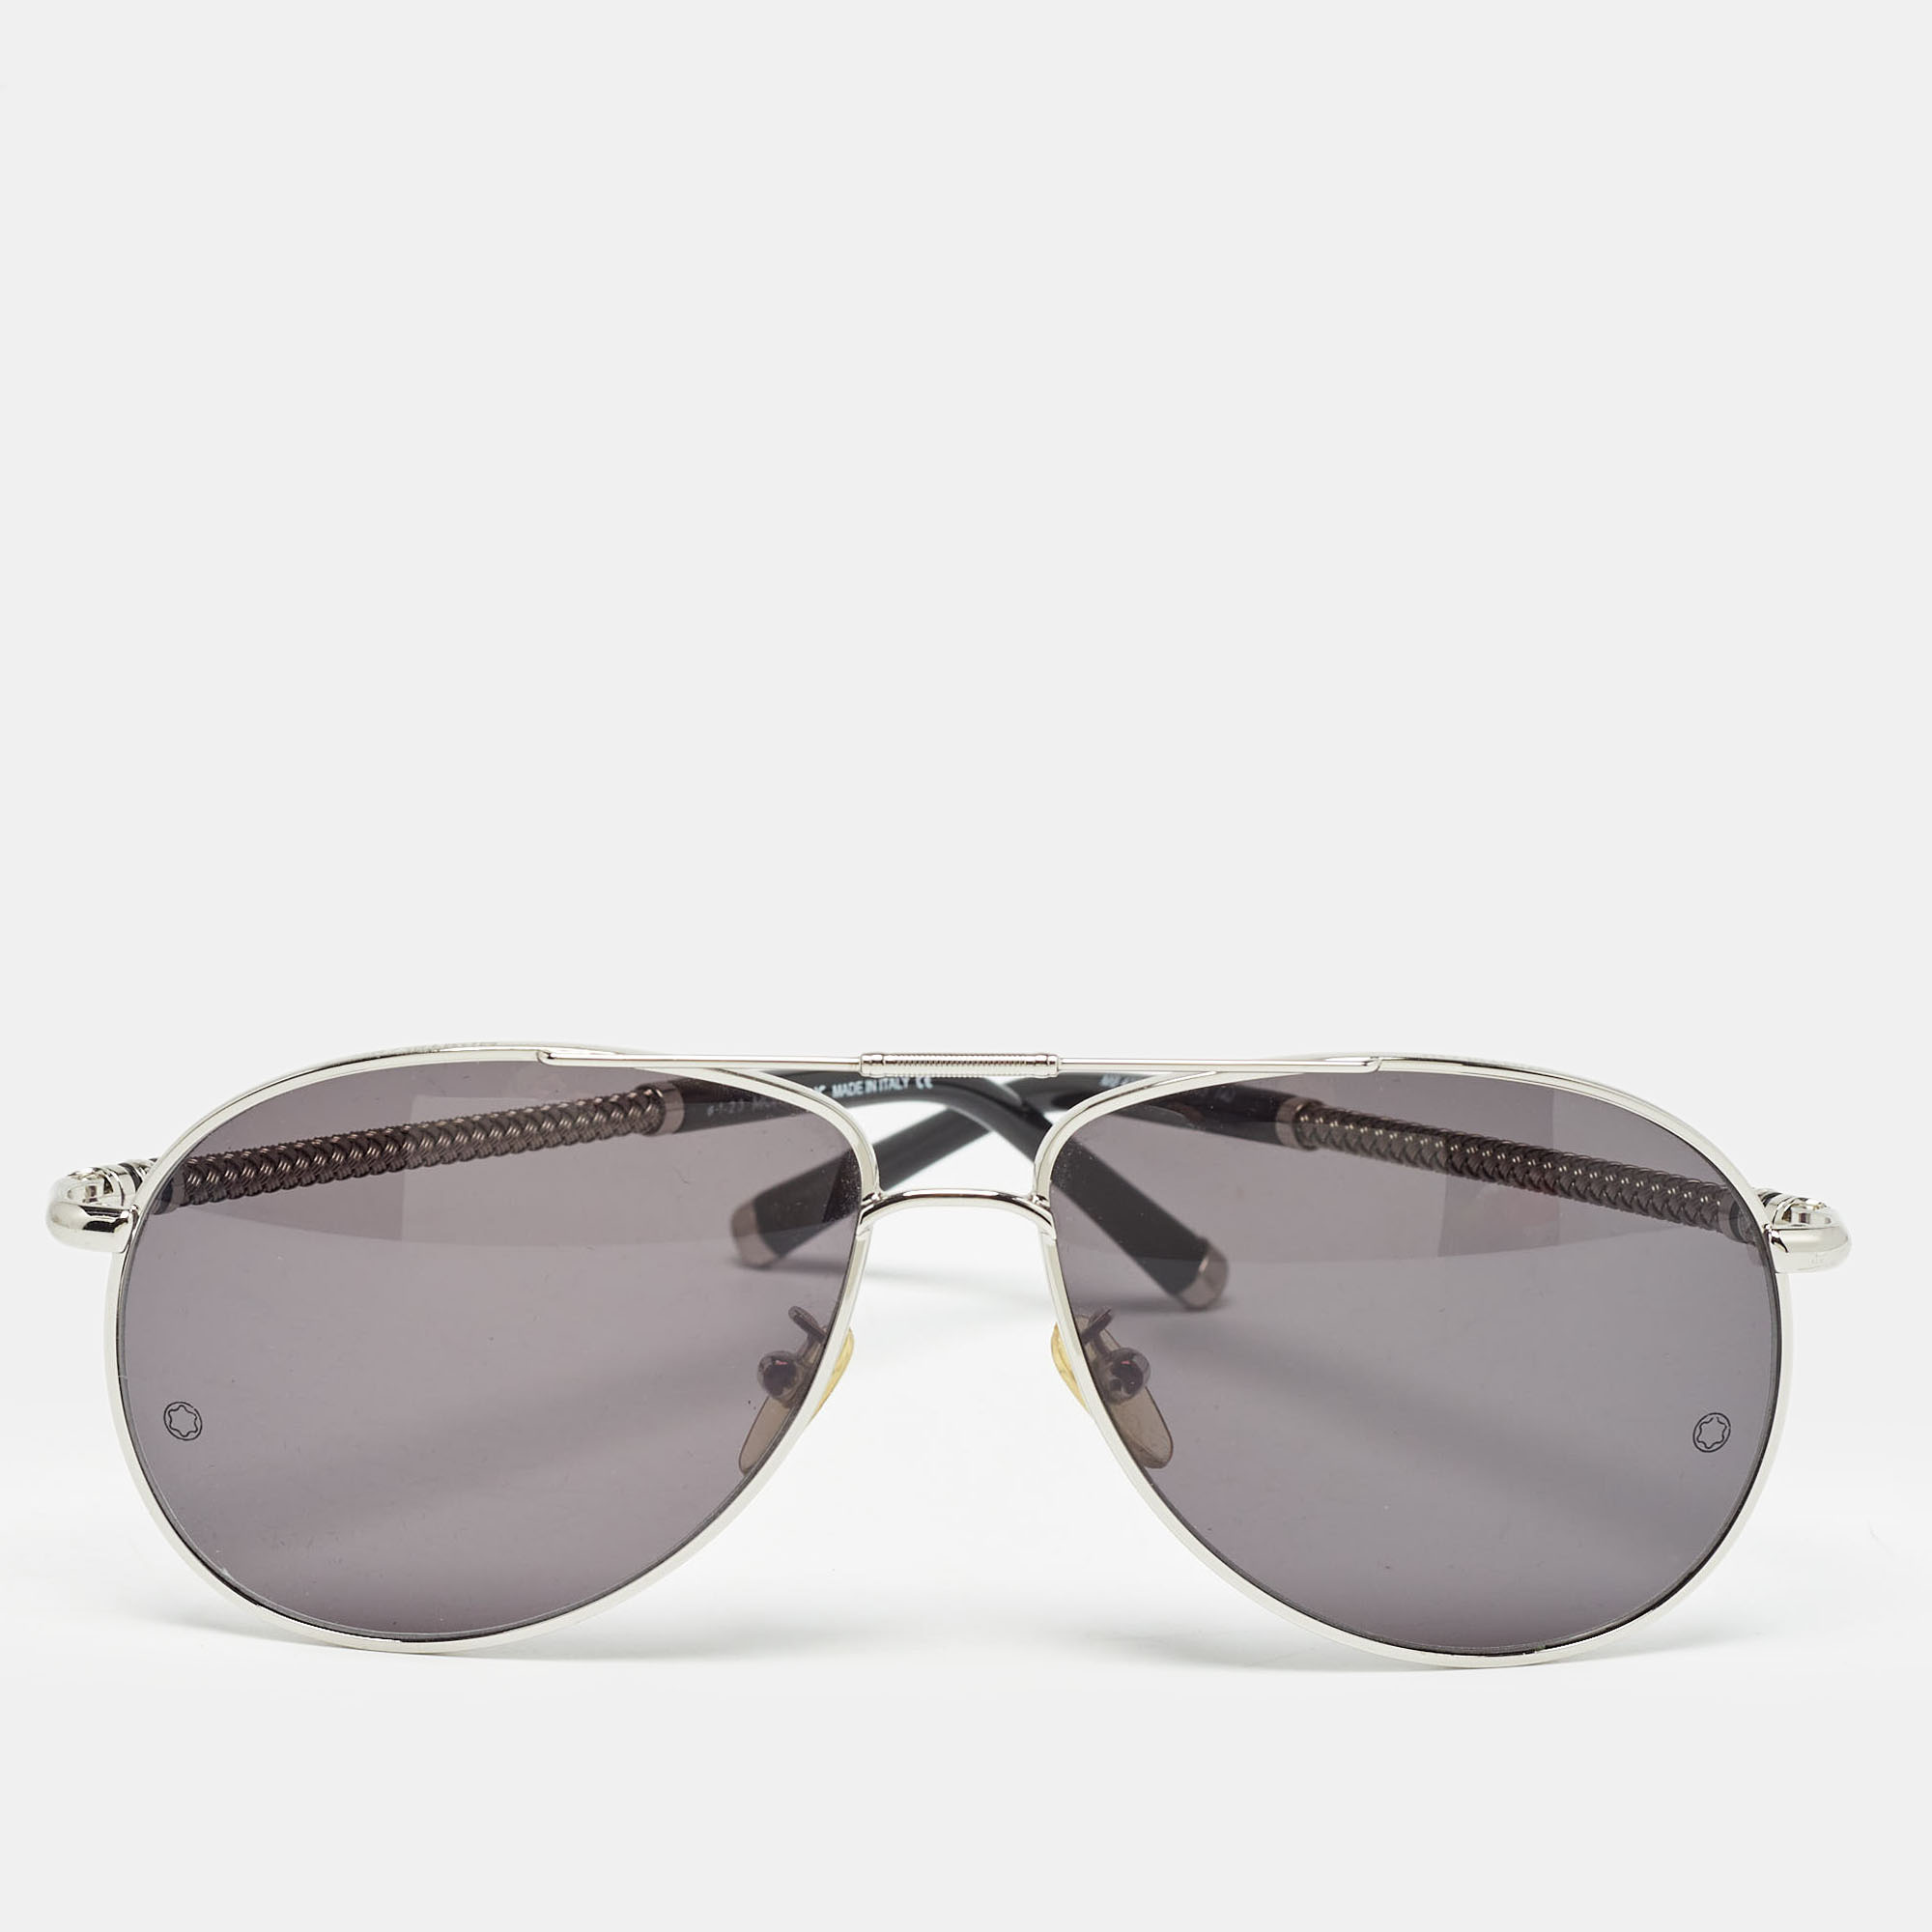 Montblanc black mb425s aviator sunglasses